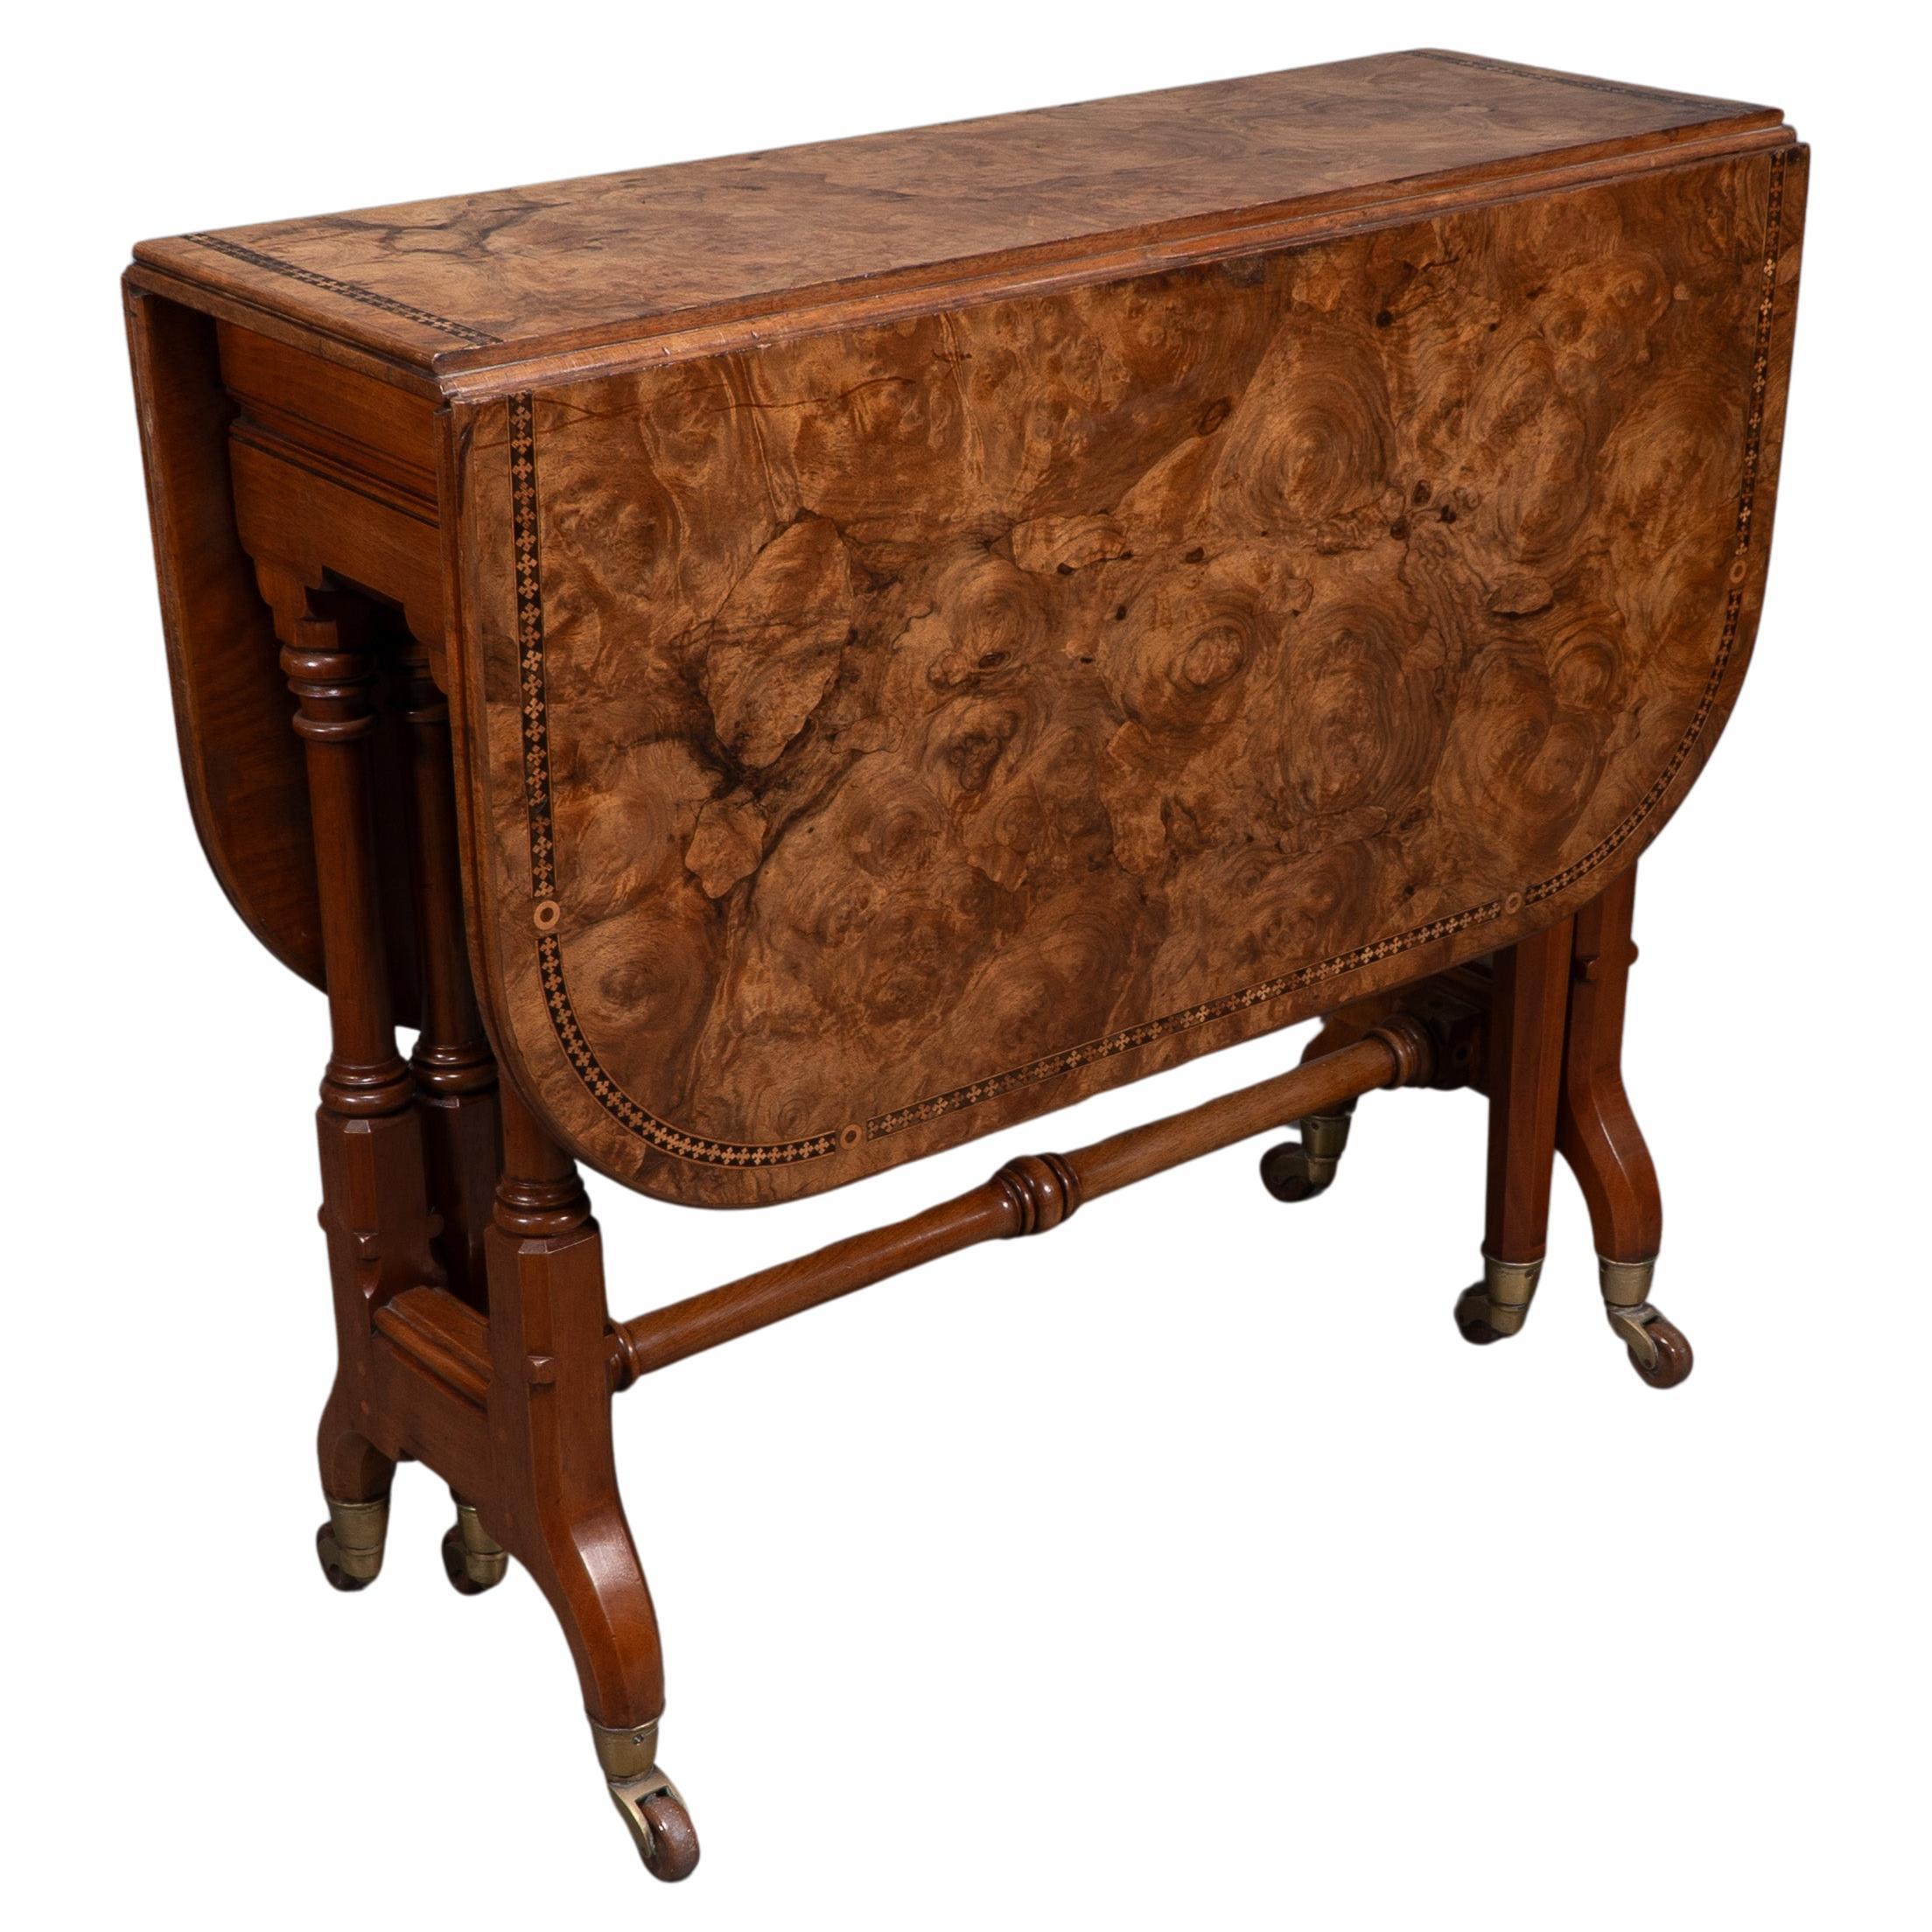 Charles Bevan for Marsh & Jones. A Gothic Revival burr walnut Sutherland table For Sale